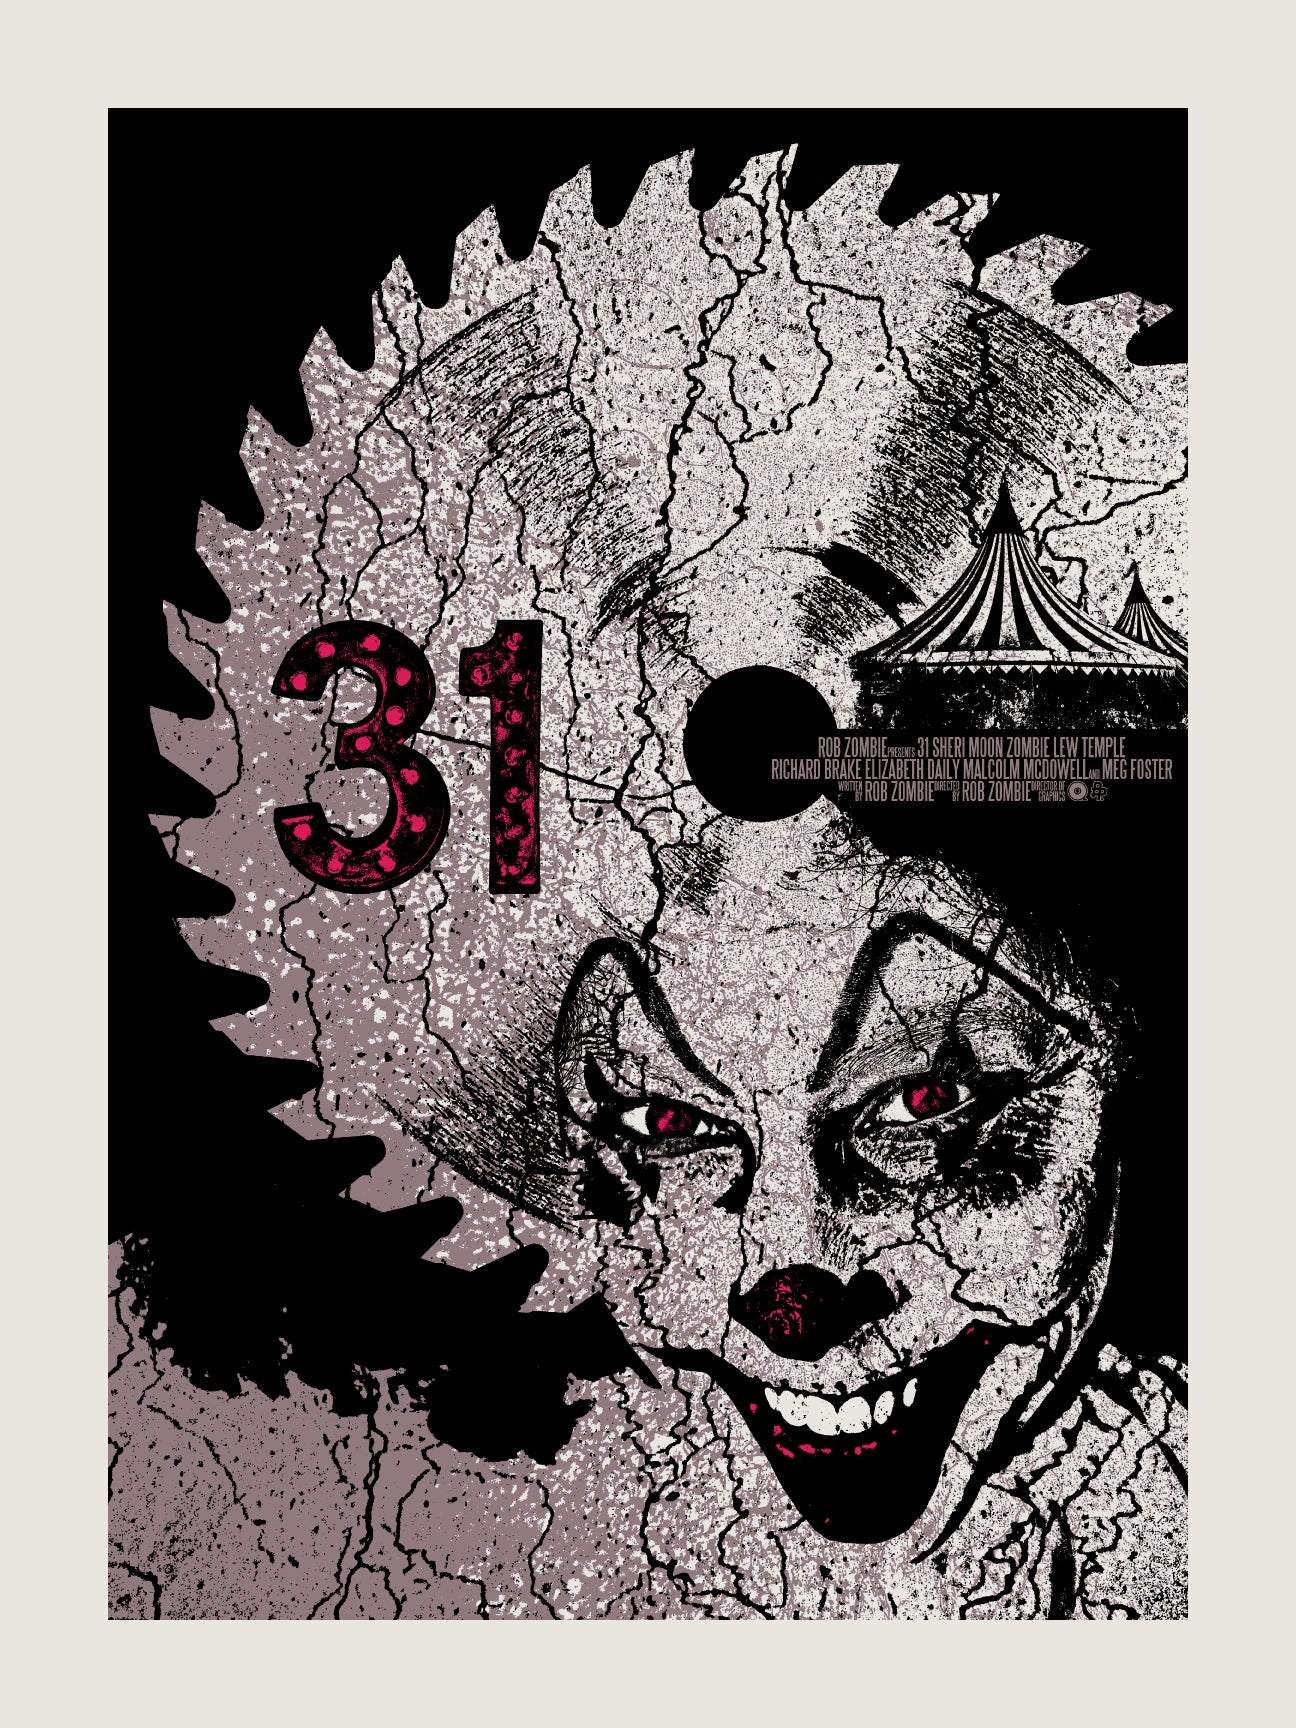 "31 Rob Zombie" by Chris Garofalo